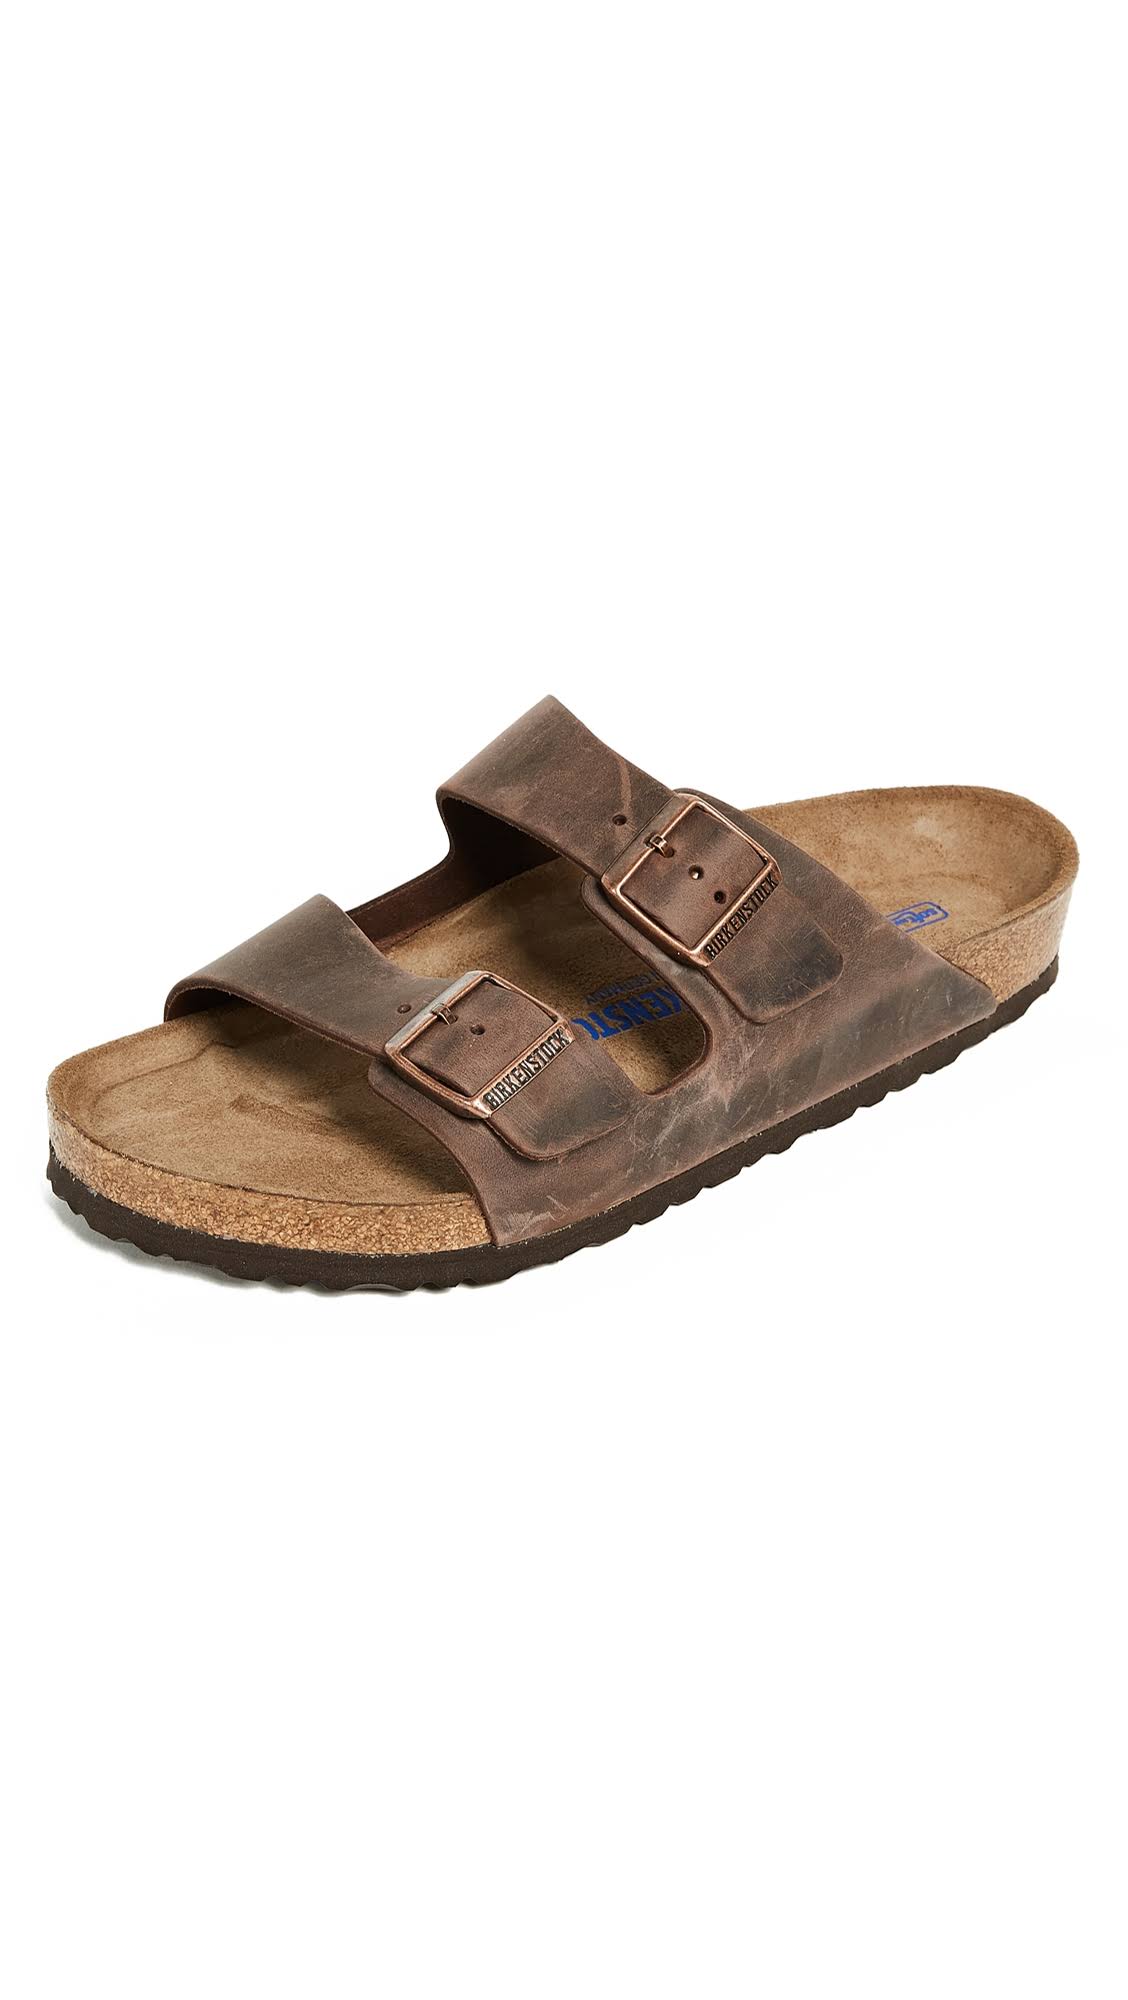 Birkenstock Unisex Arizona Sandals - Habana Oiled Leather, 43 EU